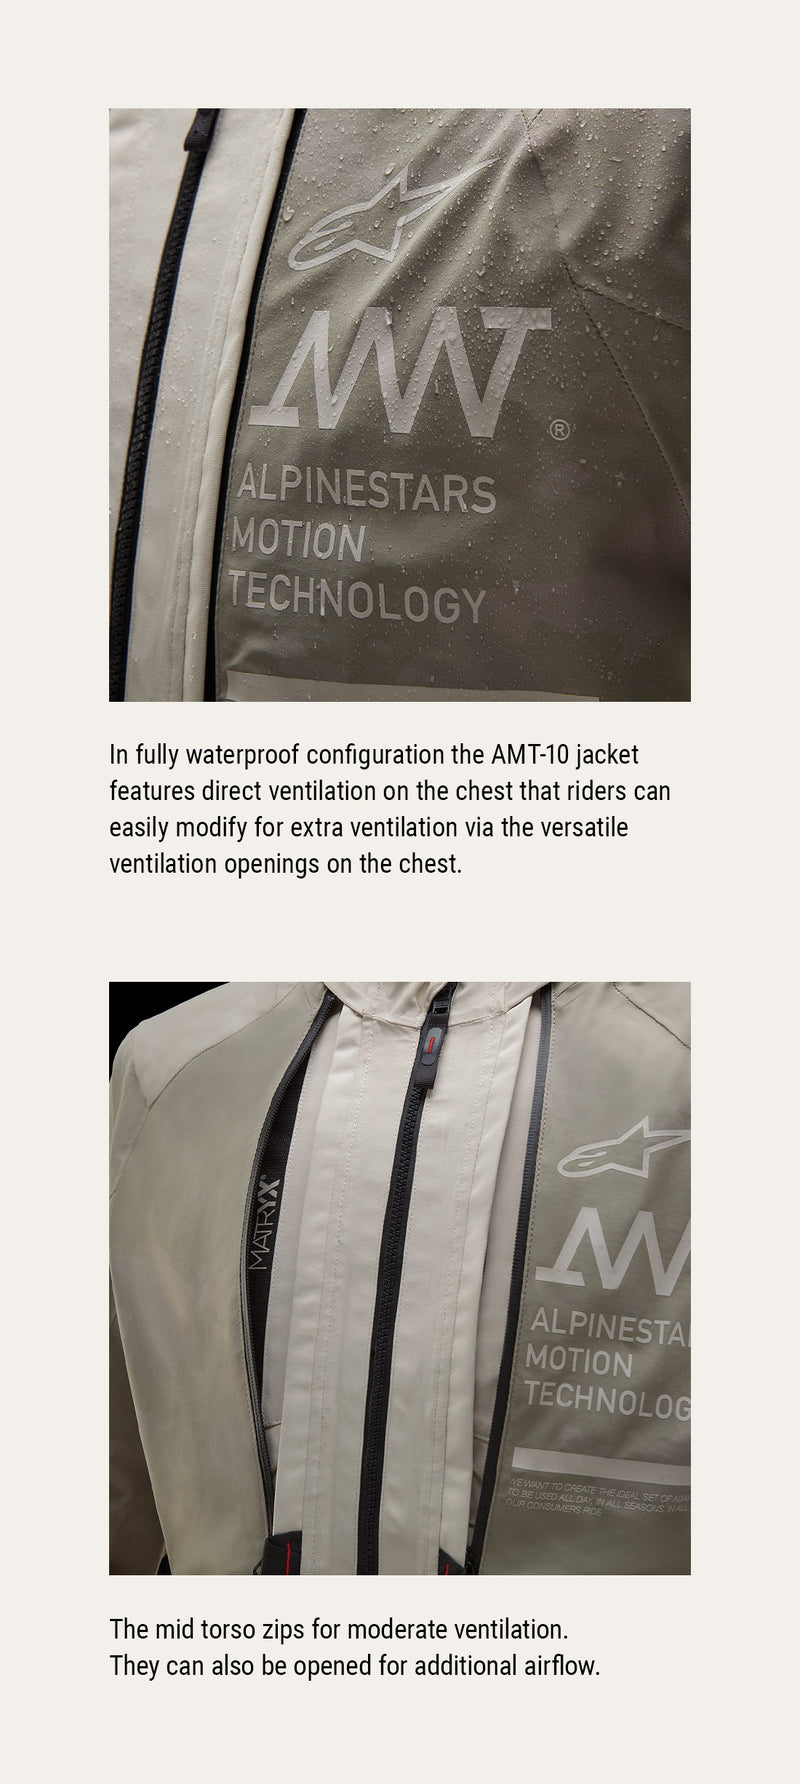 AMT-10 Lab Drystar<sup>®</sup>XF Jacket